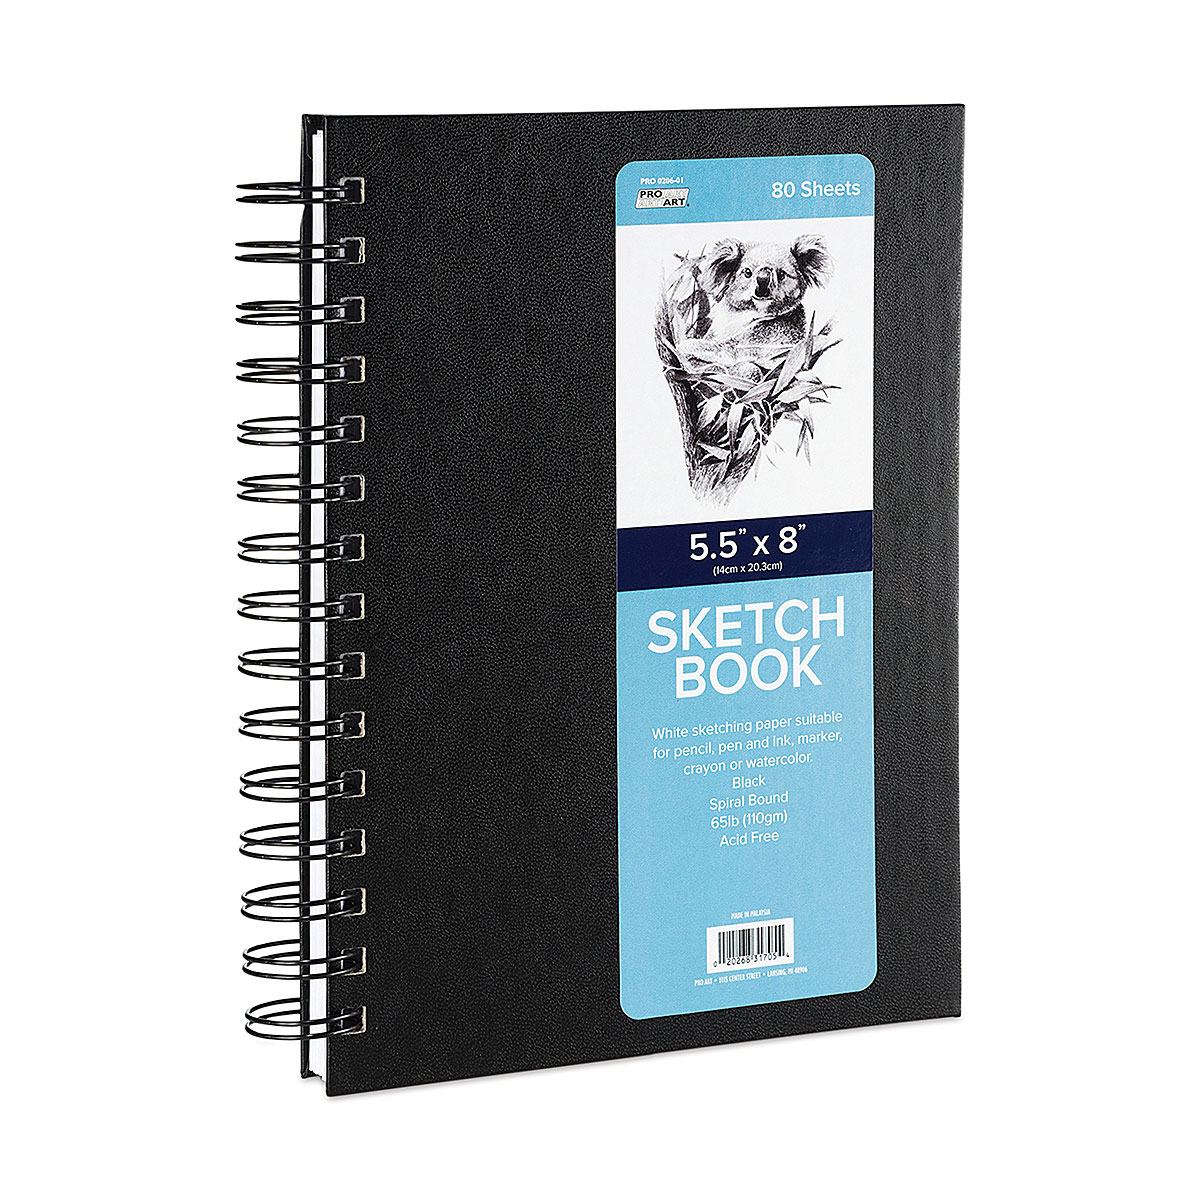 autodesk sketchbook pro 6 amazon